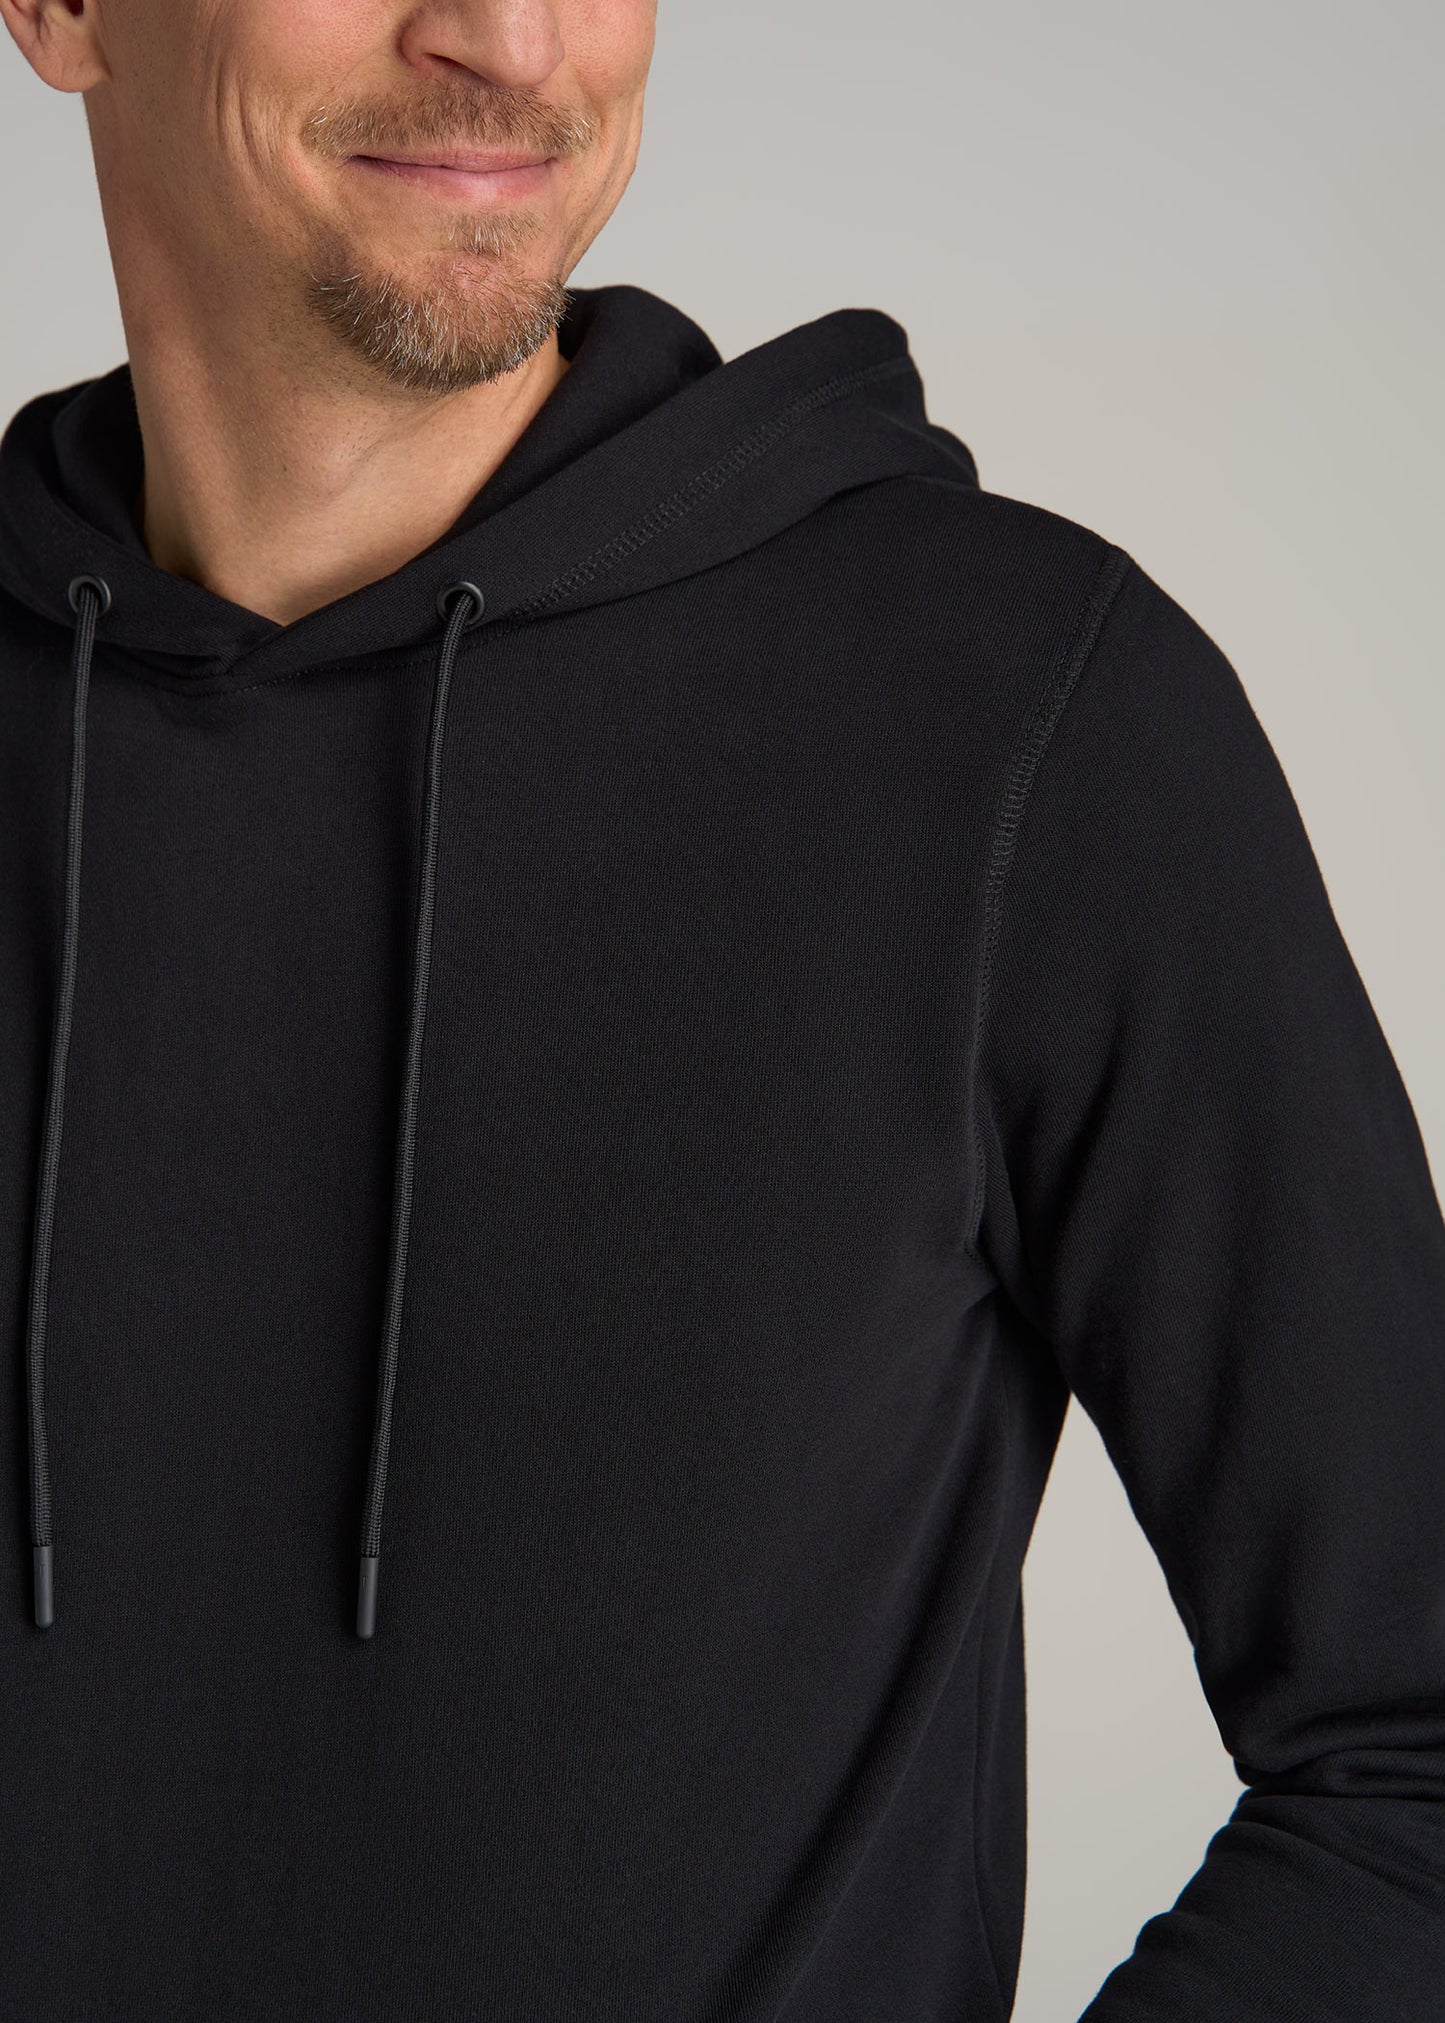 Wearever Fleece Pullover Men's Tall Hoodie in Black